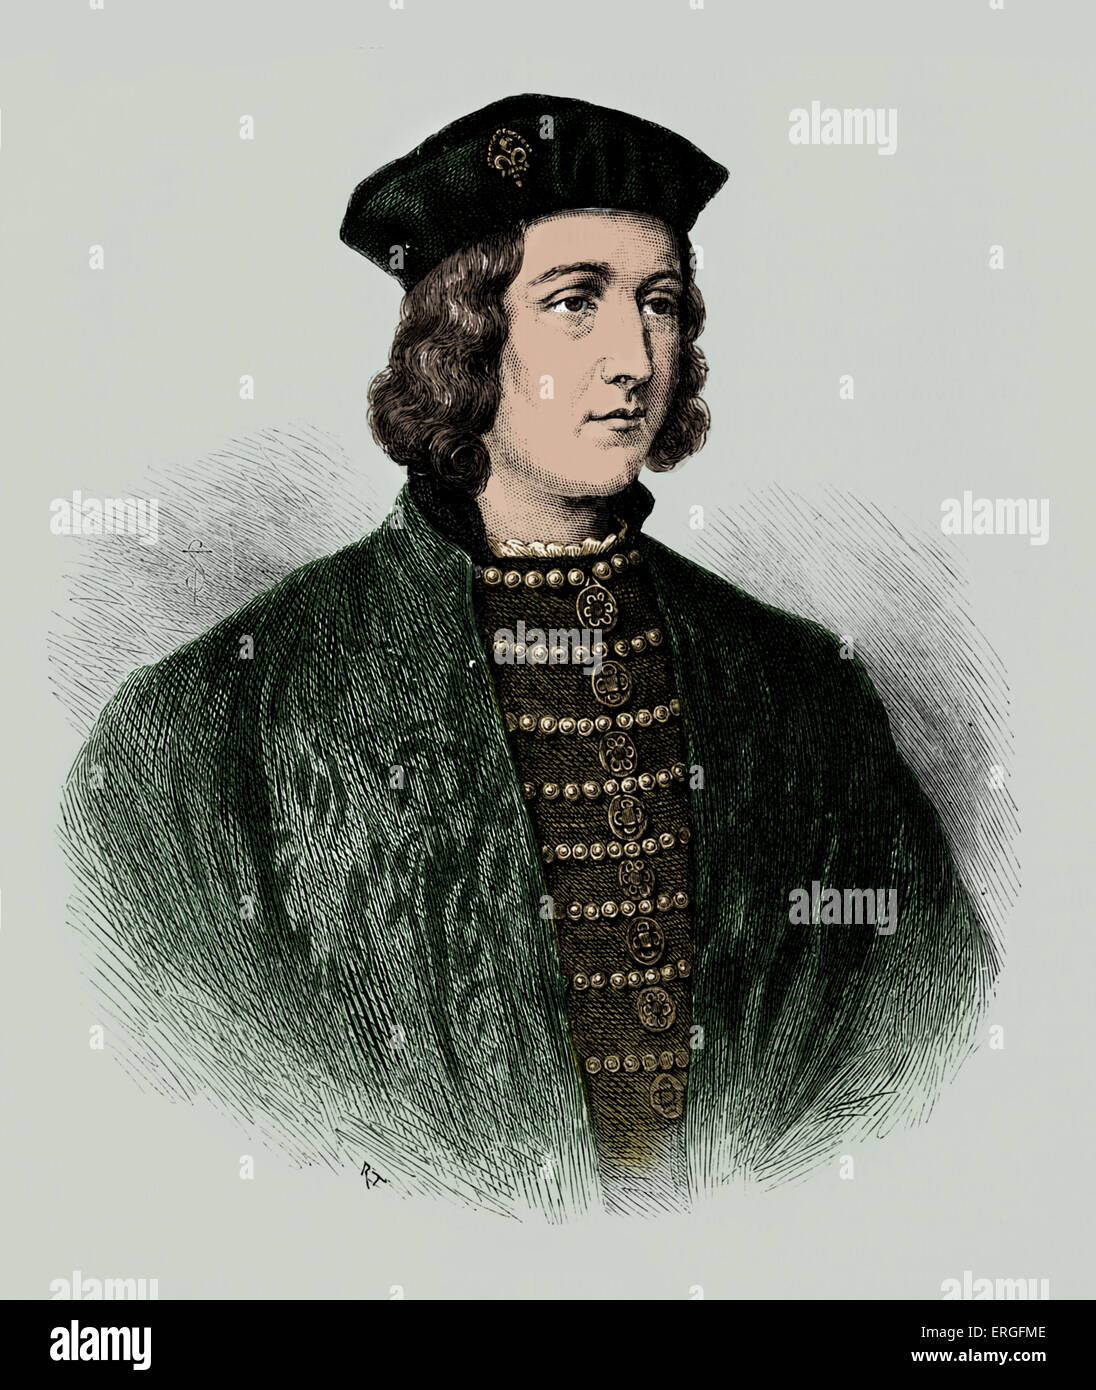 Edward IV König von England, Porträt. 28 April 1442 – 9. April 1483 Stockfoto